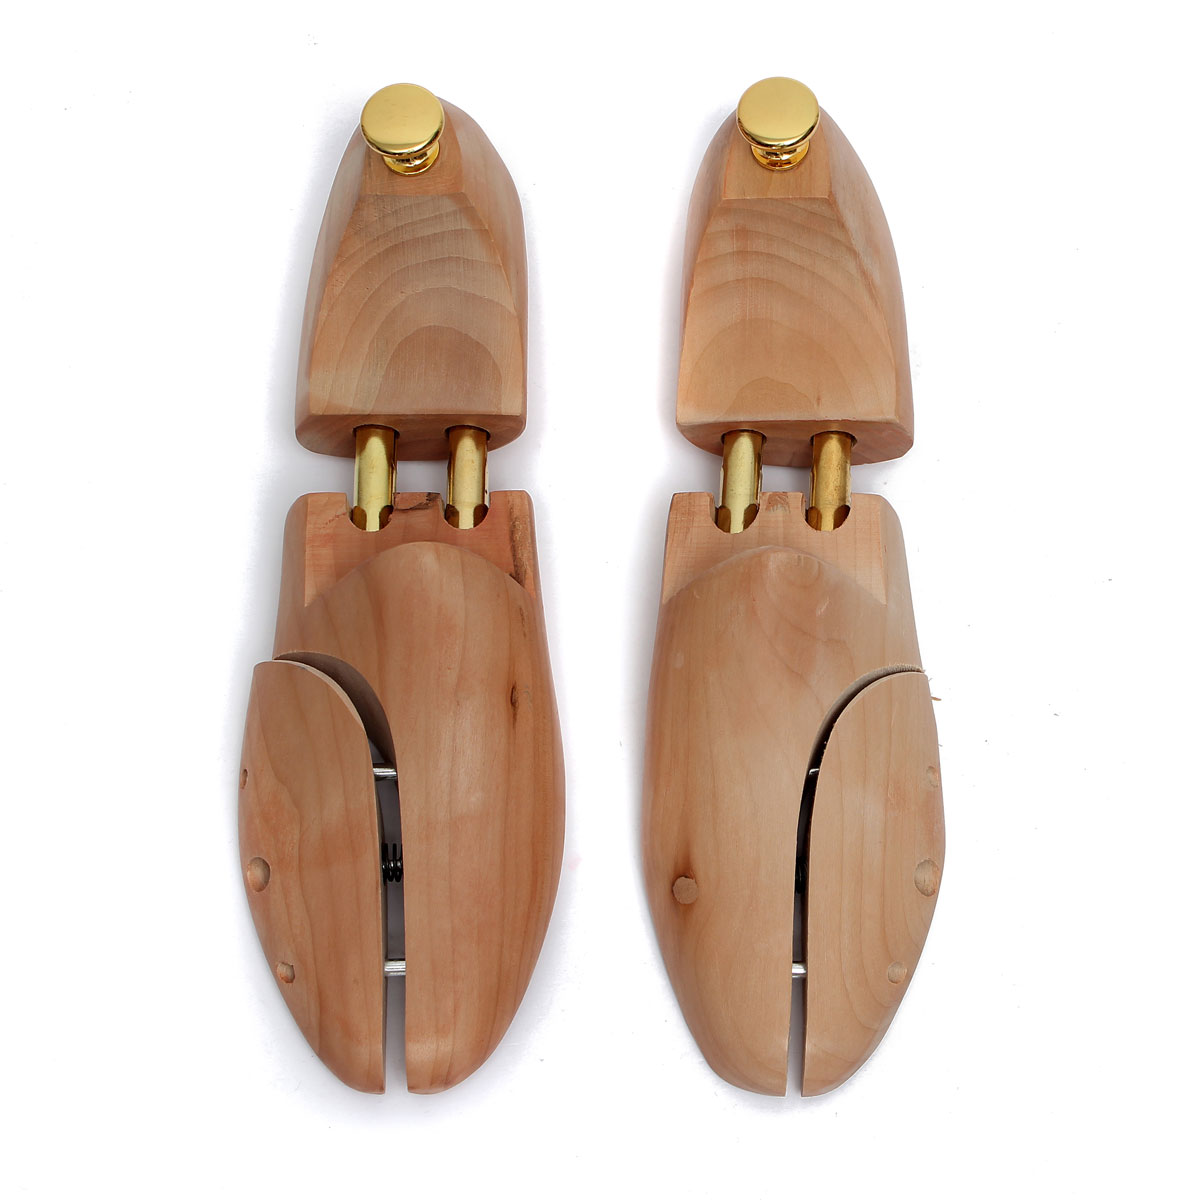 1 Pair Shoe Tree Wood Shoes Stretcher, Wooden Adjustable Man Women Flats Pumps Boot Shaper Rack Expander Trees Size 35-46